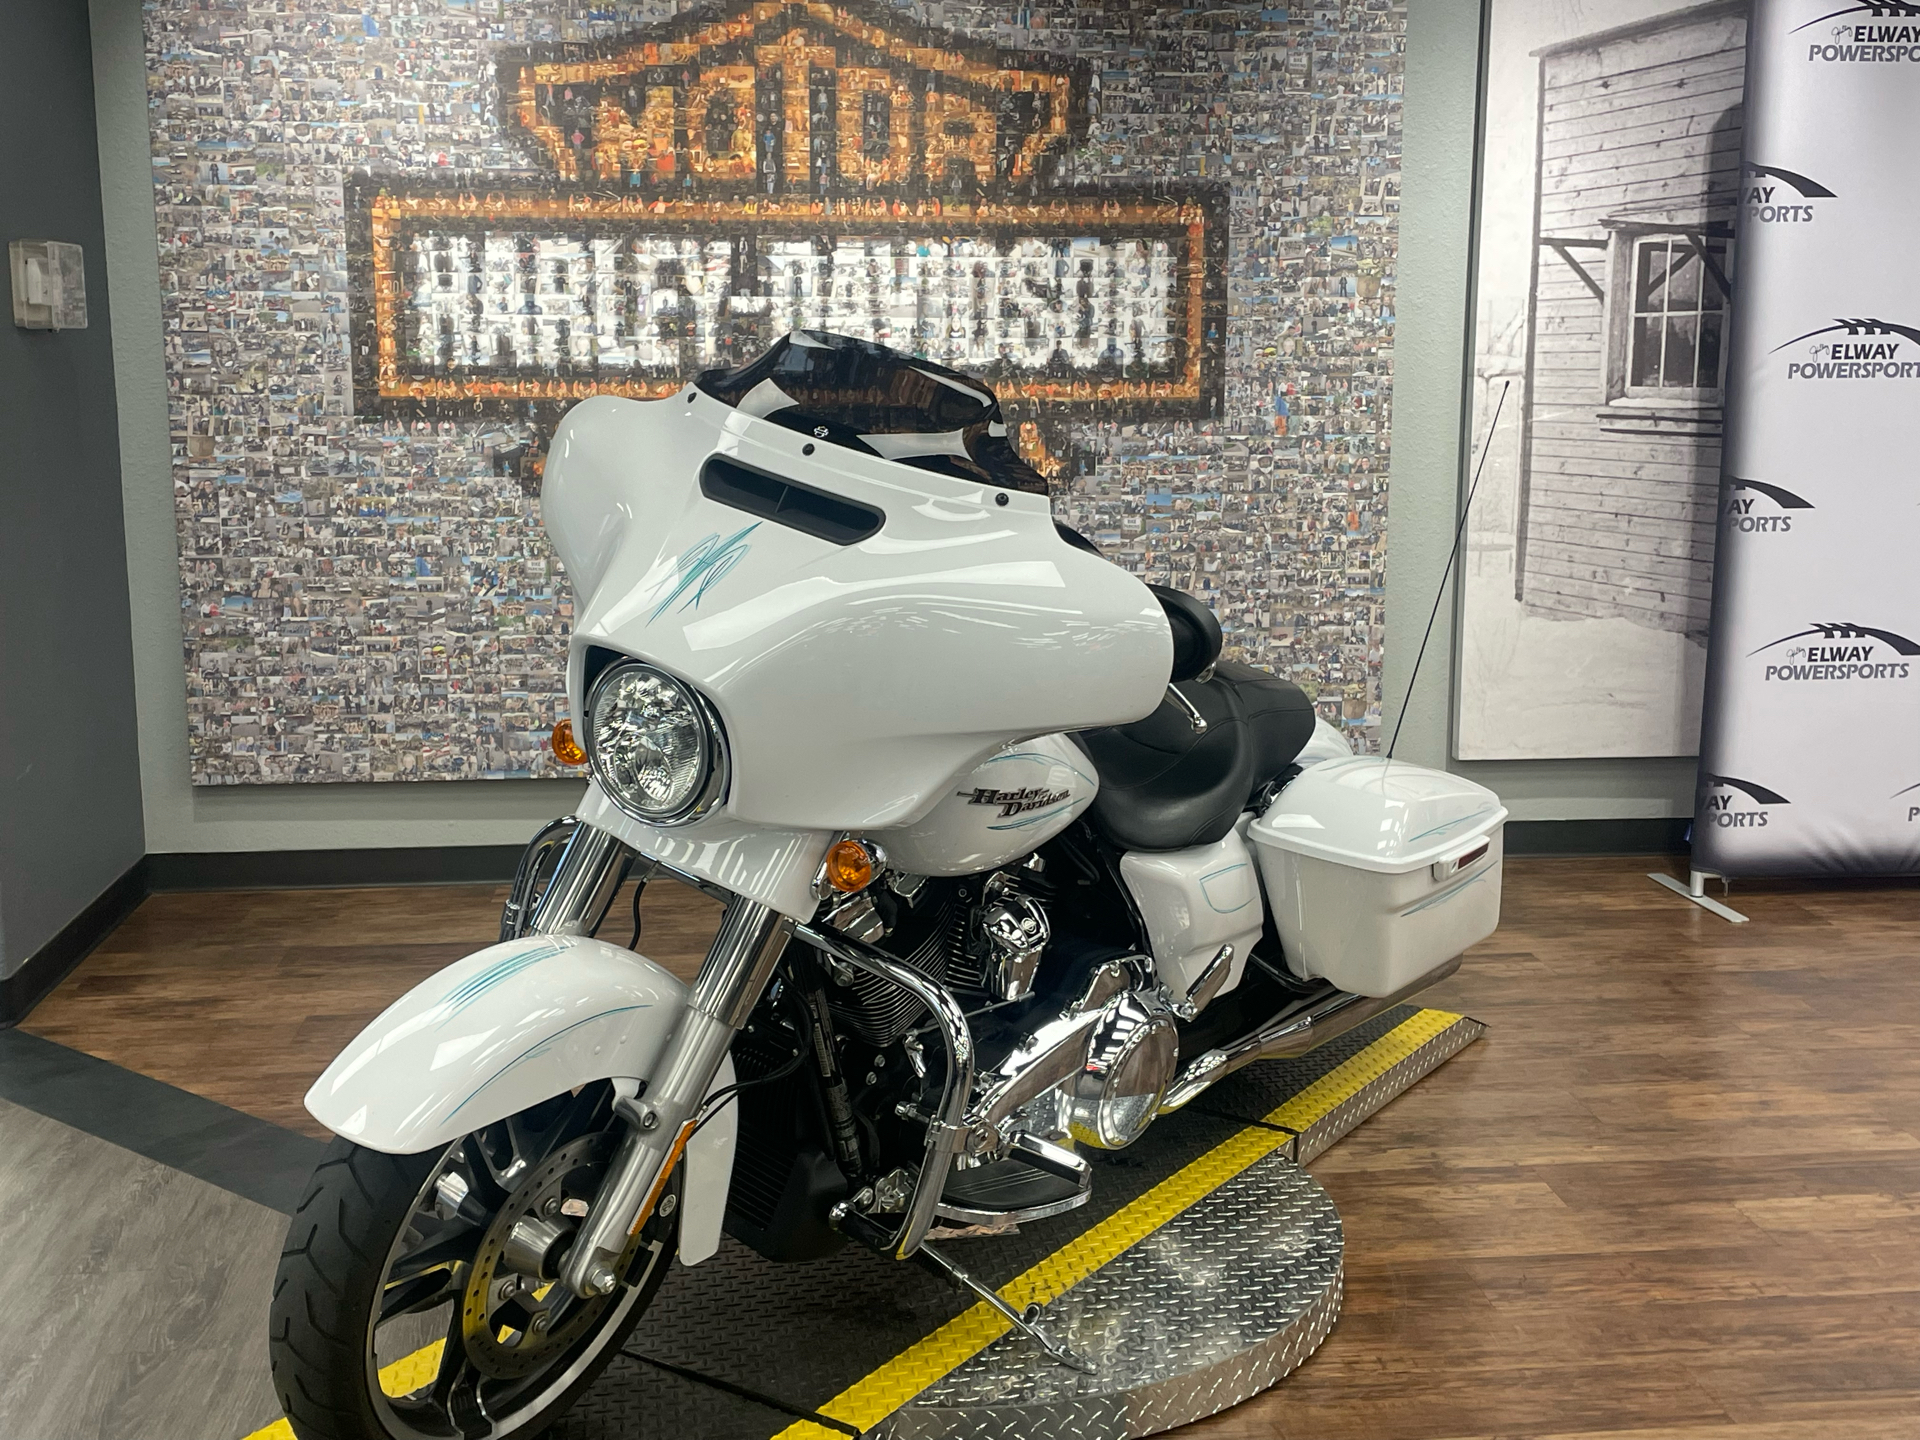 2017 Harley-Davidson Street Glide® Special in Greeley, Colorado - Photo 3